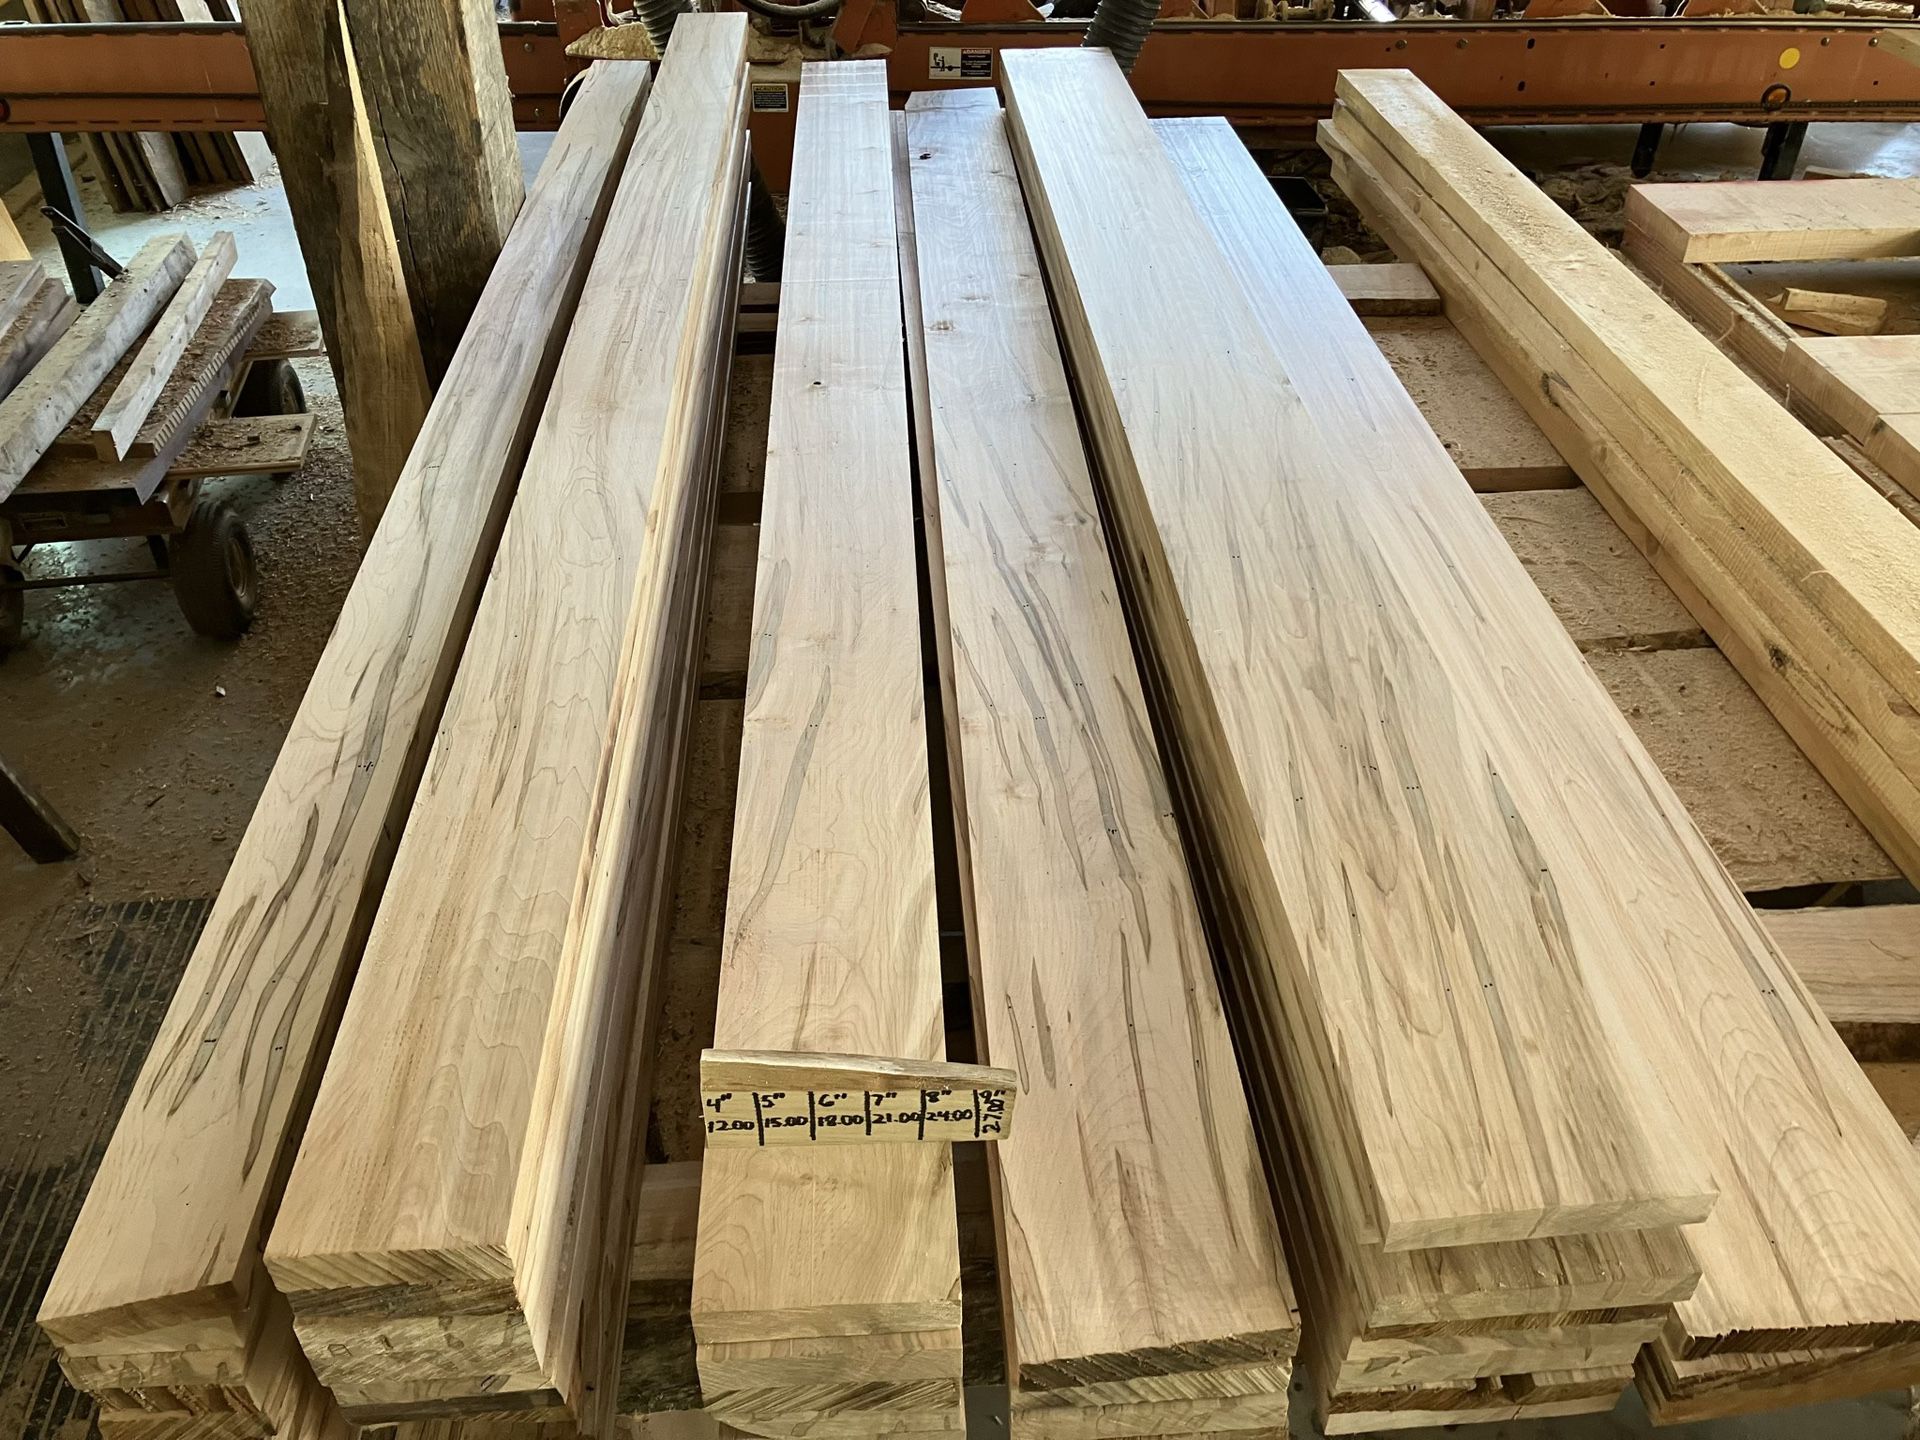 1 1/4” Ambrosia Maple Lumber